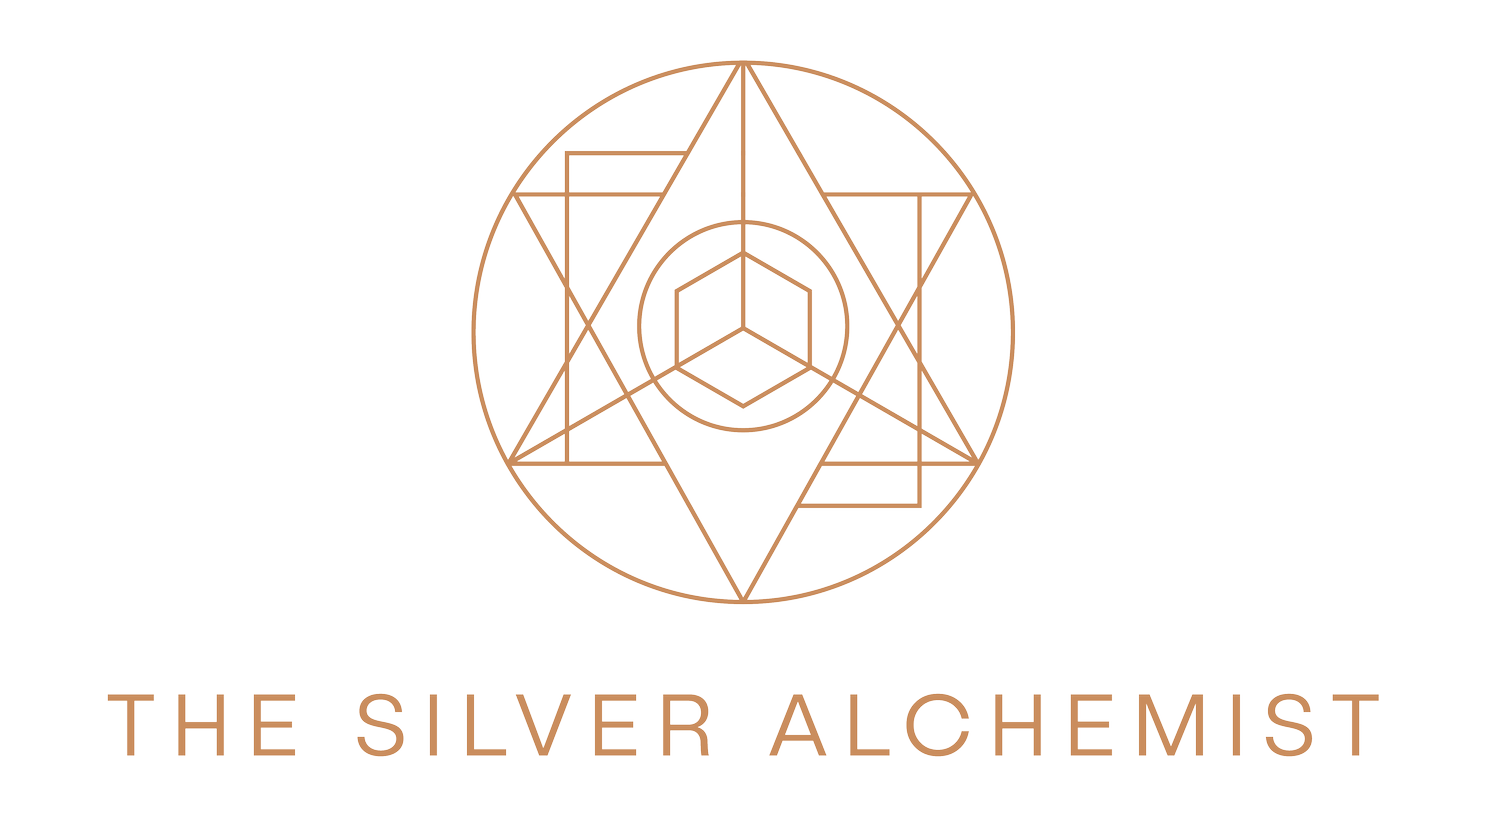 The Silver Alchemist